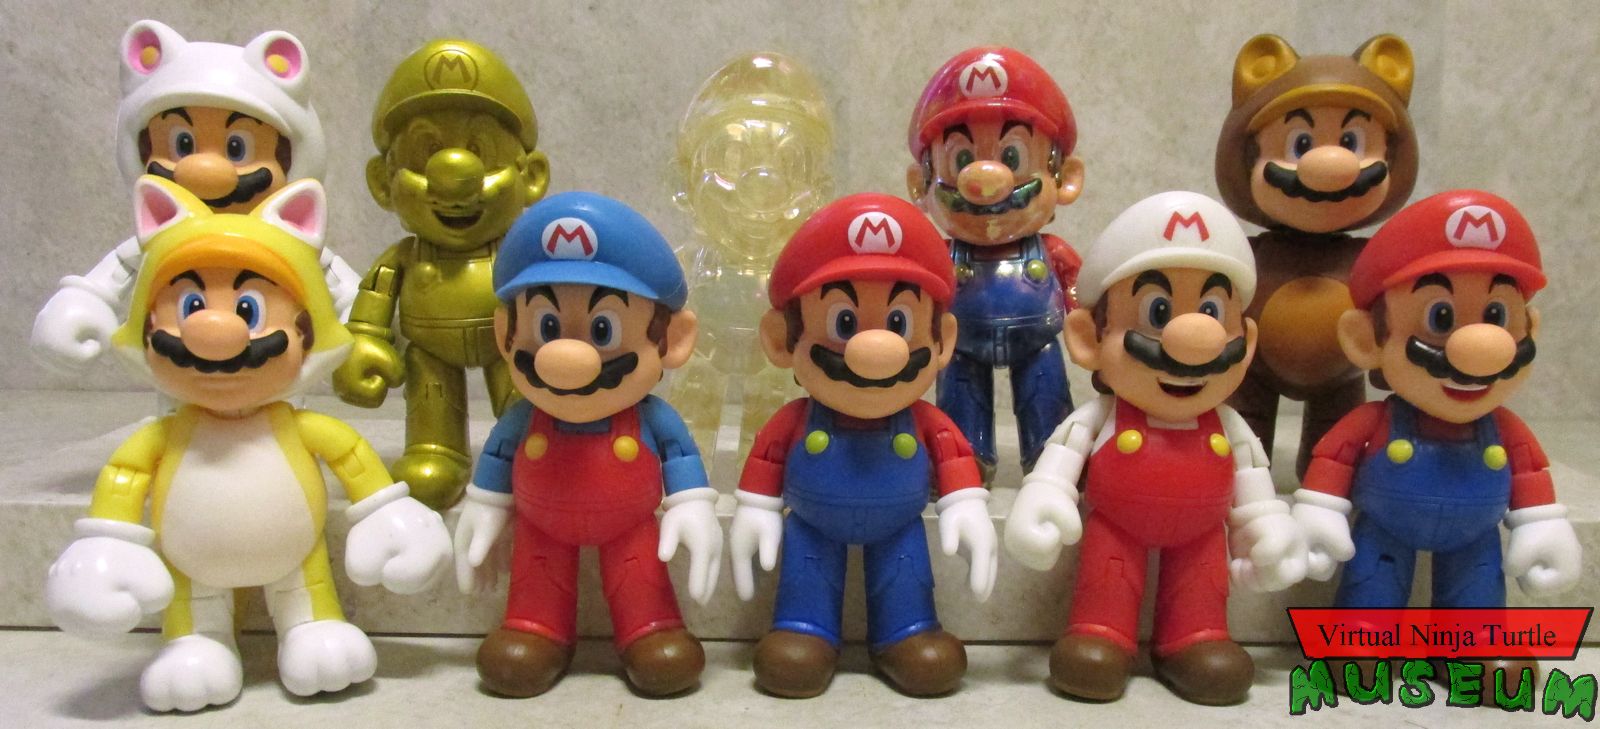 all Mario figures